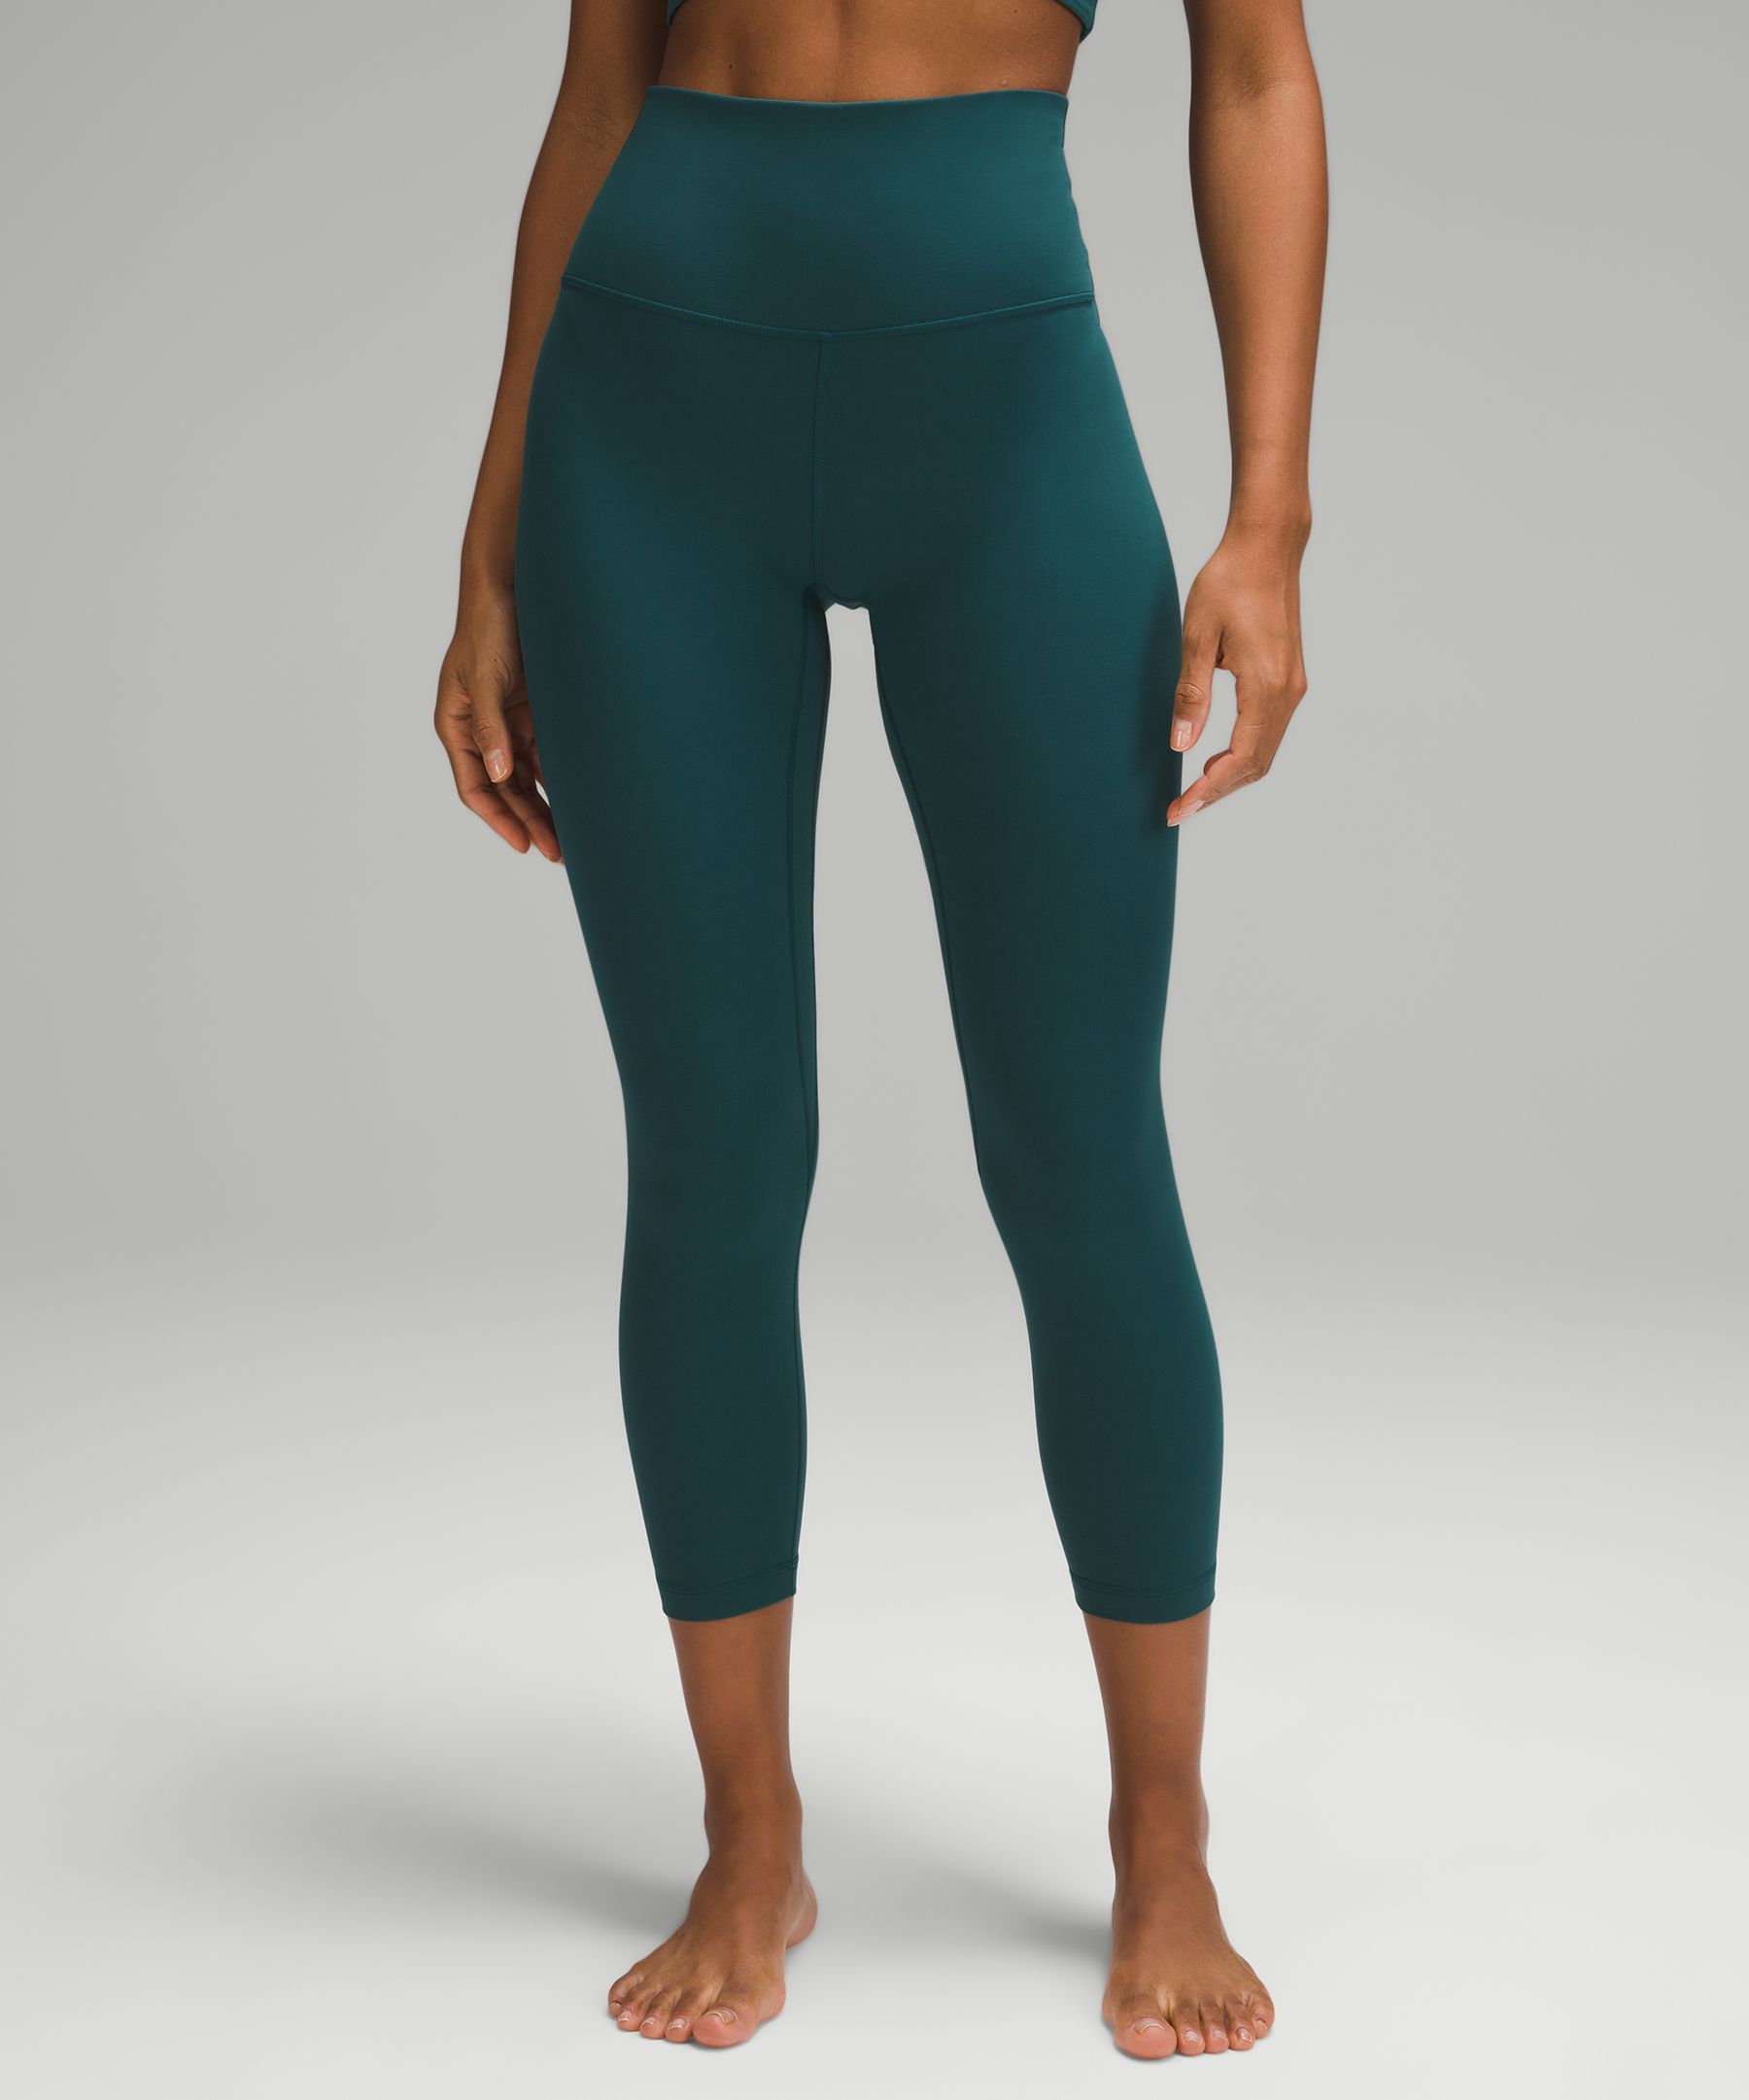 Lululemon Camo Capri Leggings Yoga Pants Women's 4 Training Workout Green  5837